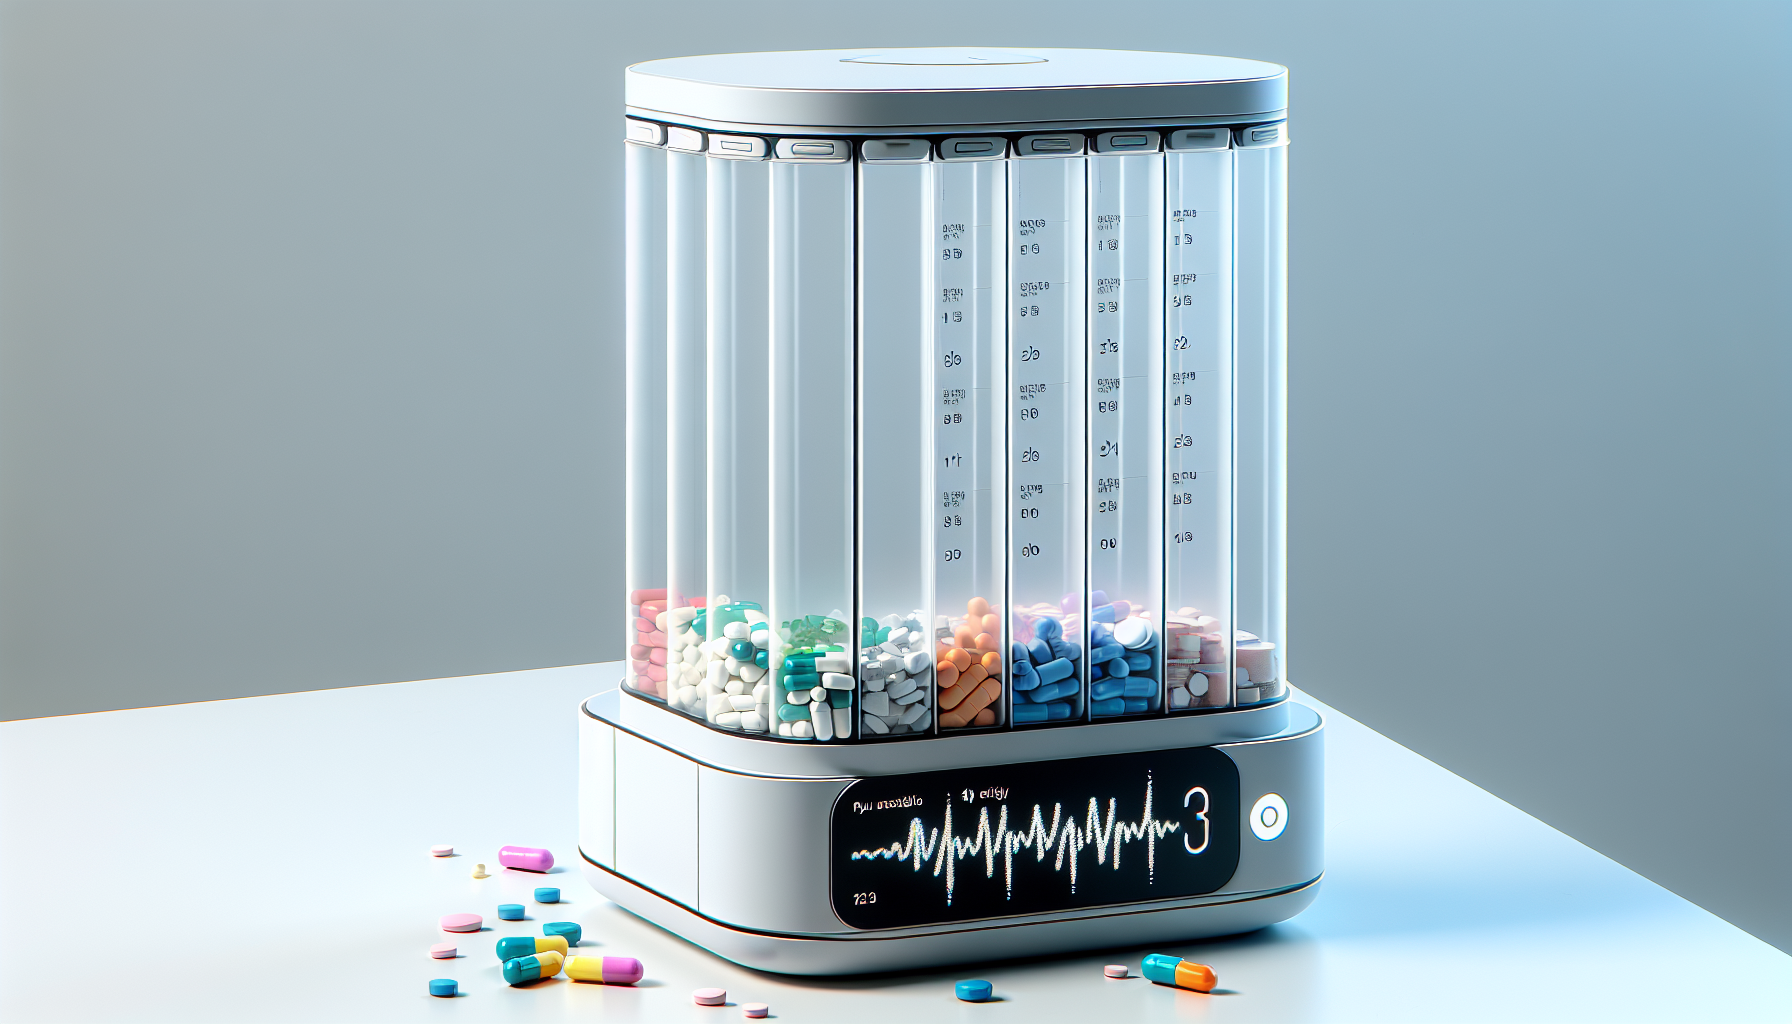 Hero pill dispenser with medications inside